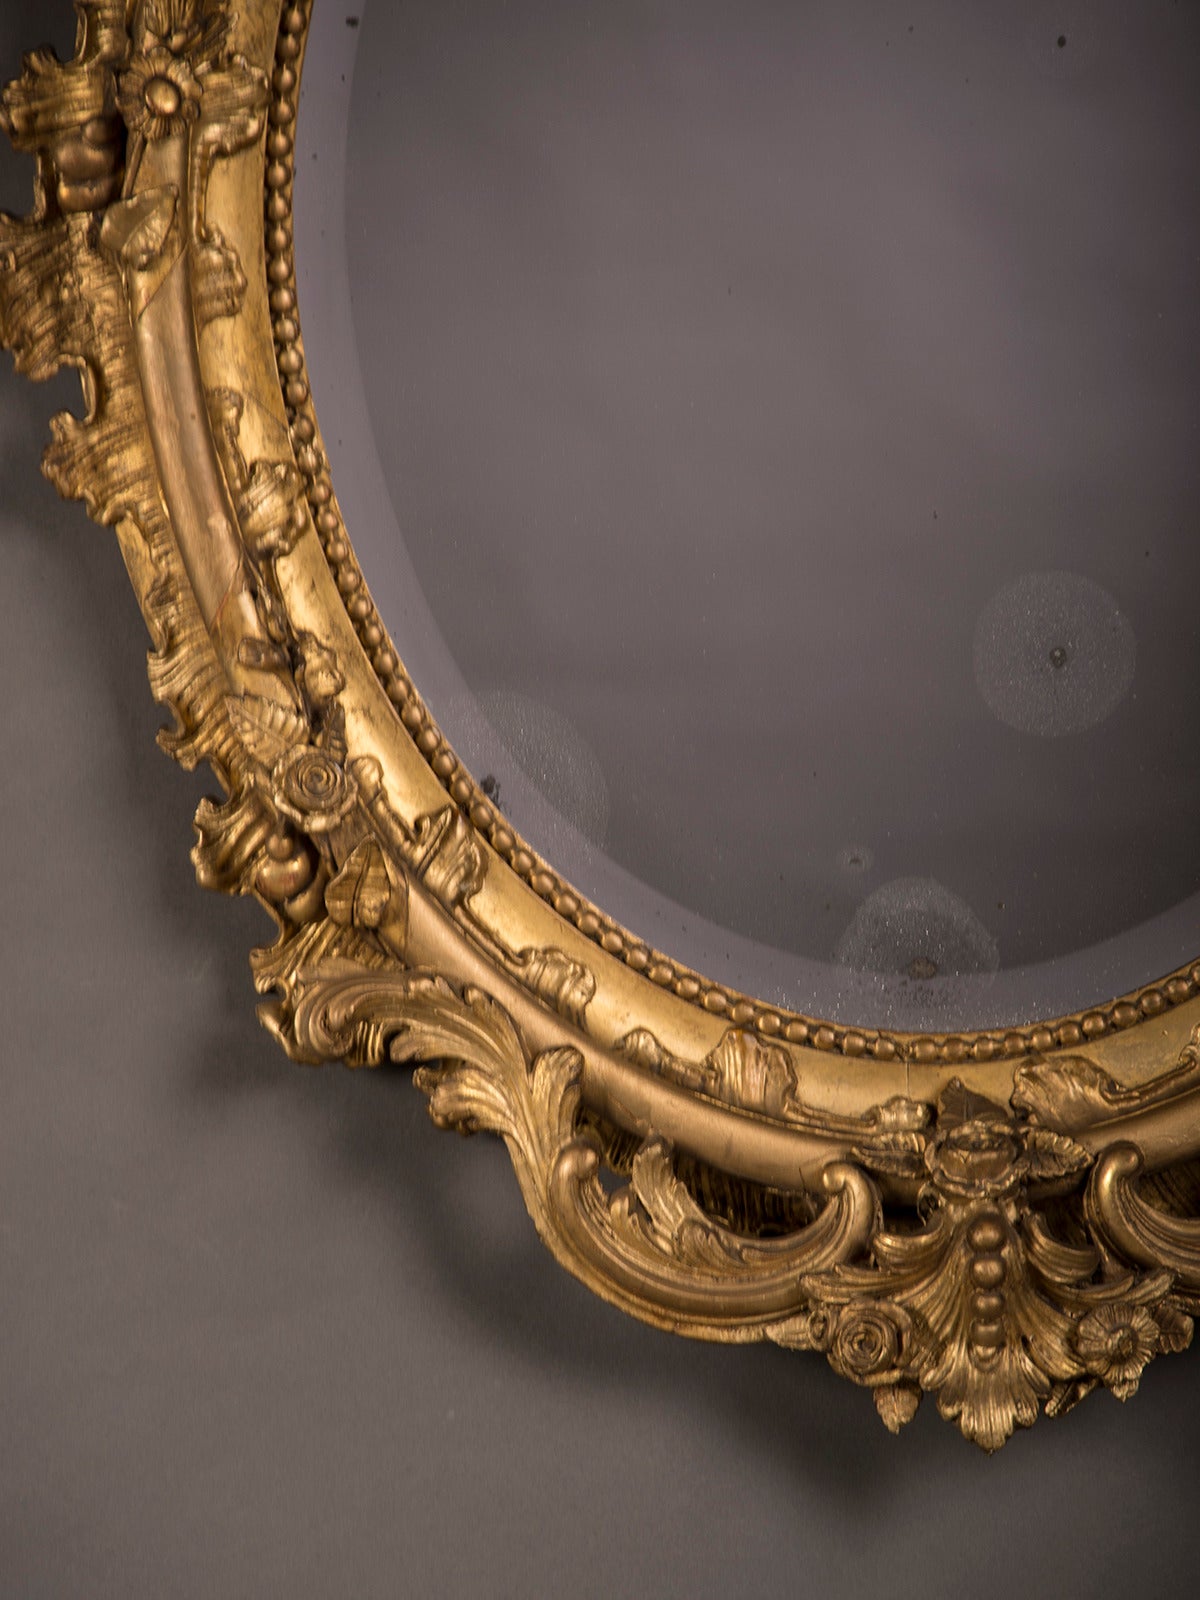 Belle Époque Gilded Oval Mirror from Belle Epoque Period France circa 1890 (32